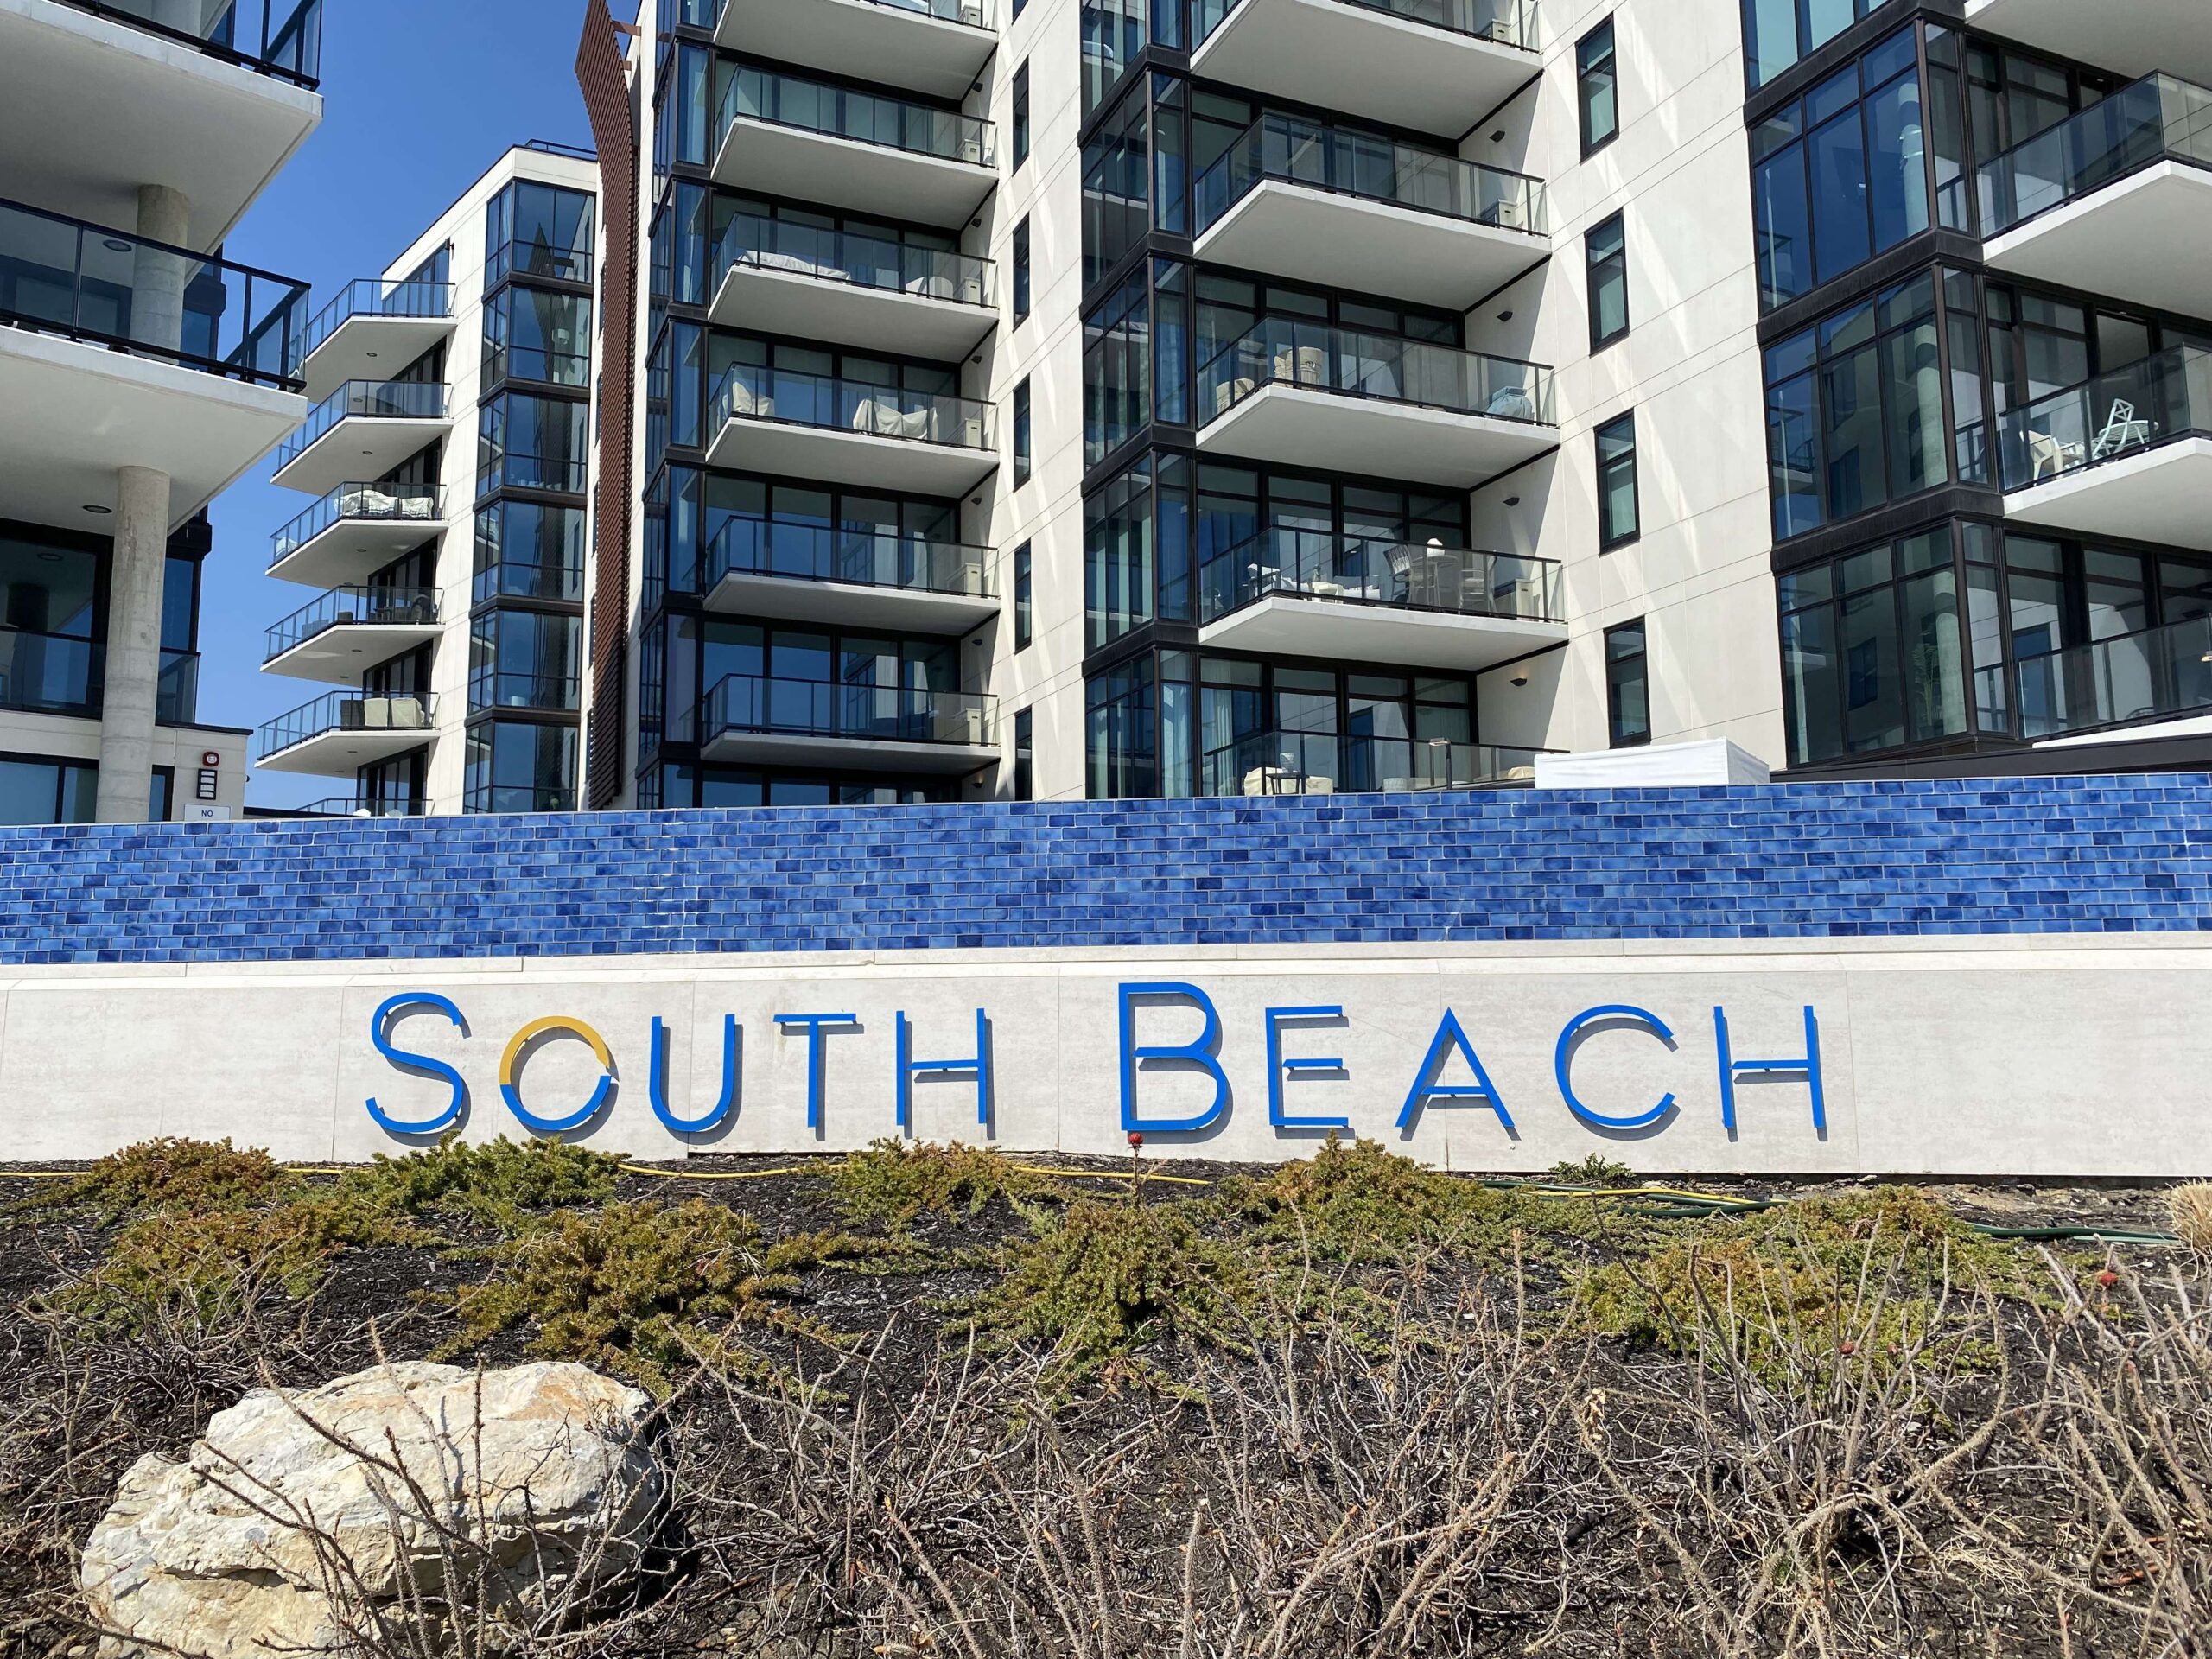 South Beach at Long Branch